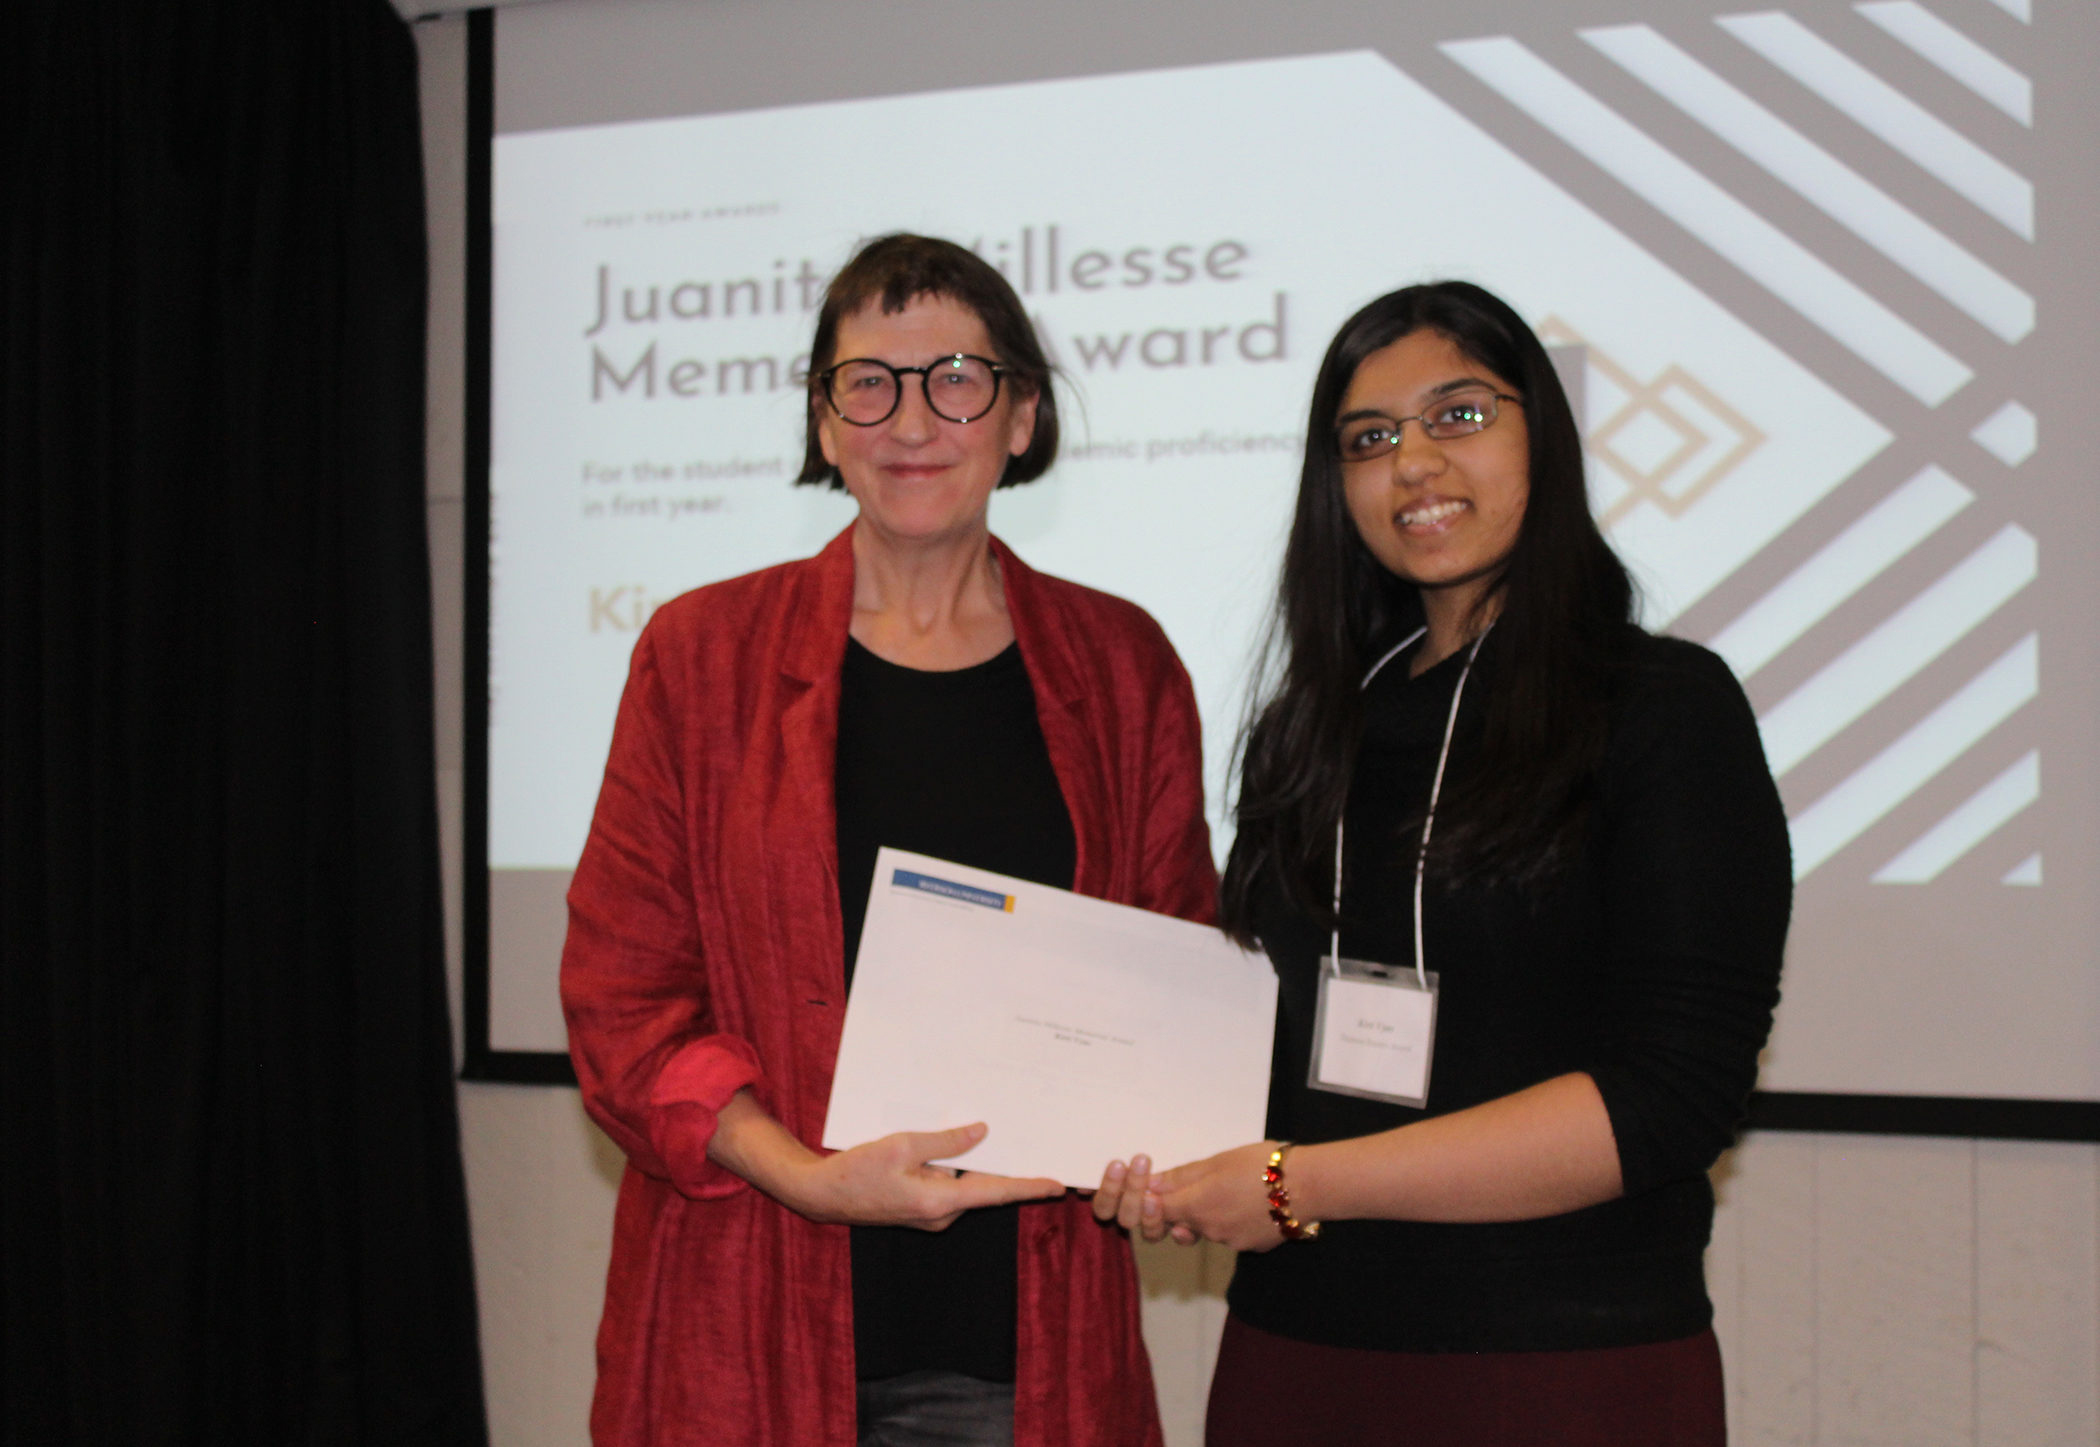 Juanita Millesse Memorial Award recipient Kirti Vyas with Awards Committee Chair Jagg Carr-Locke.